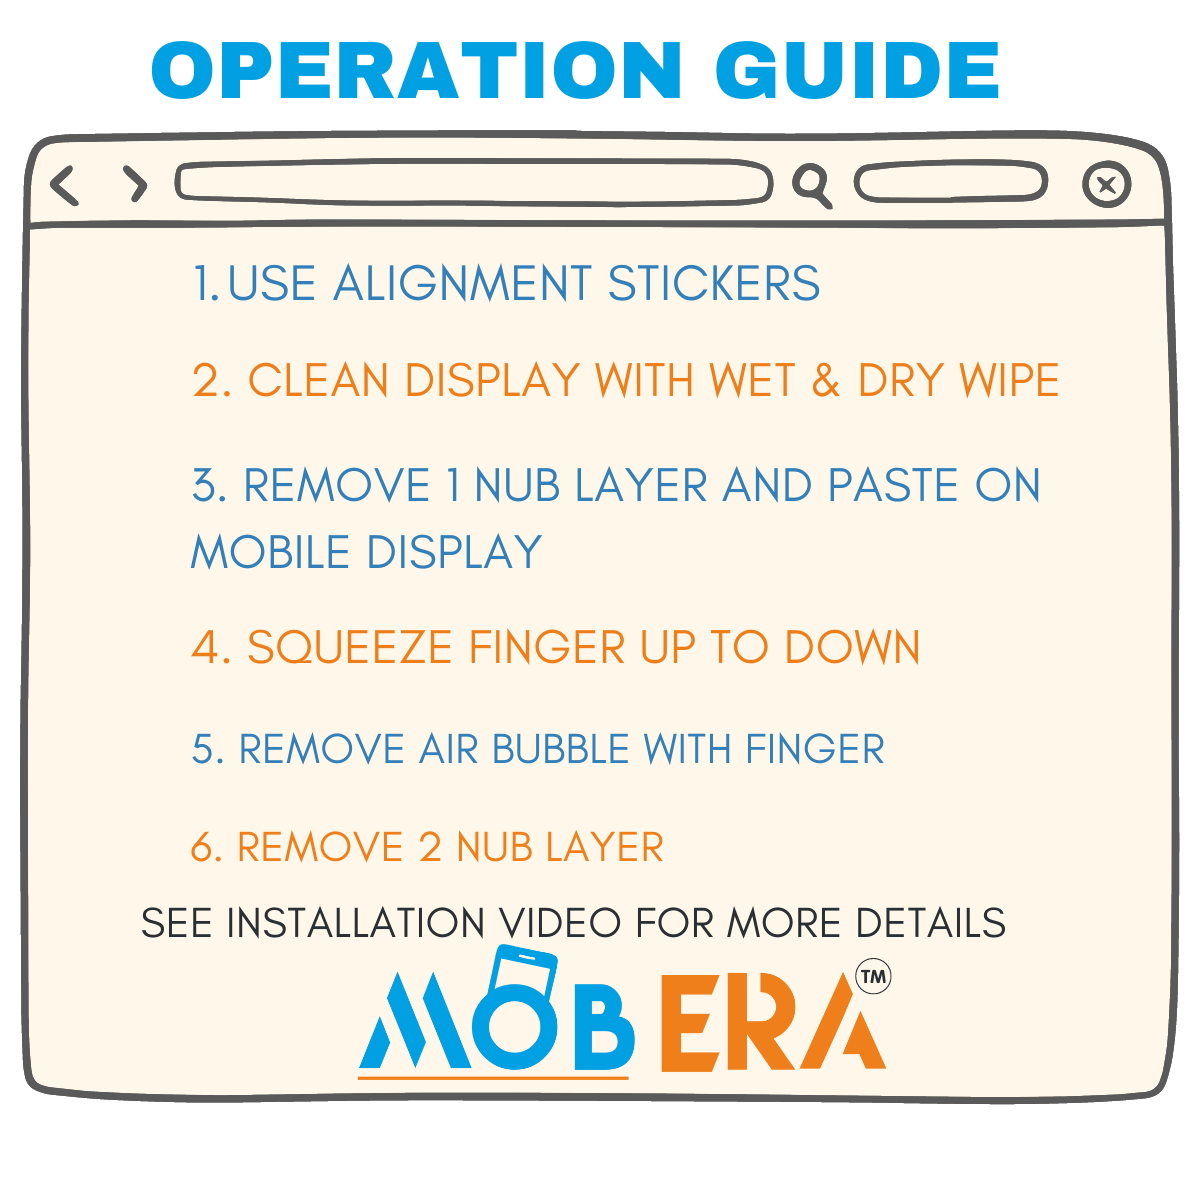 Motorola One Action image